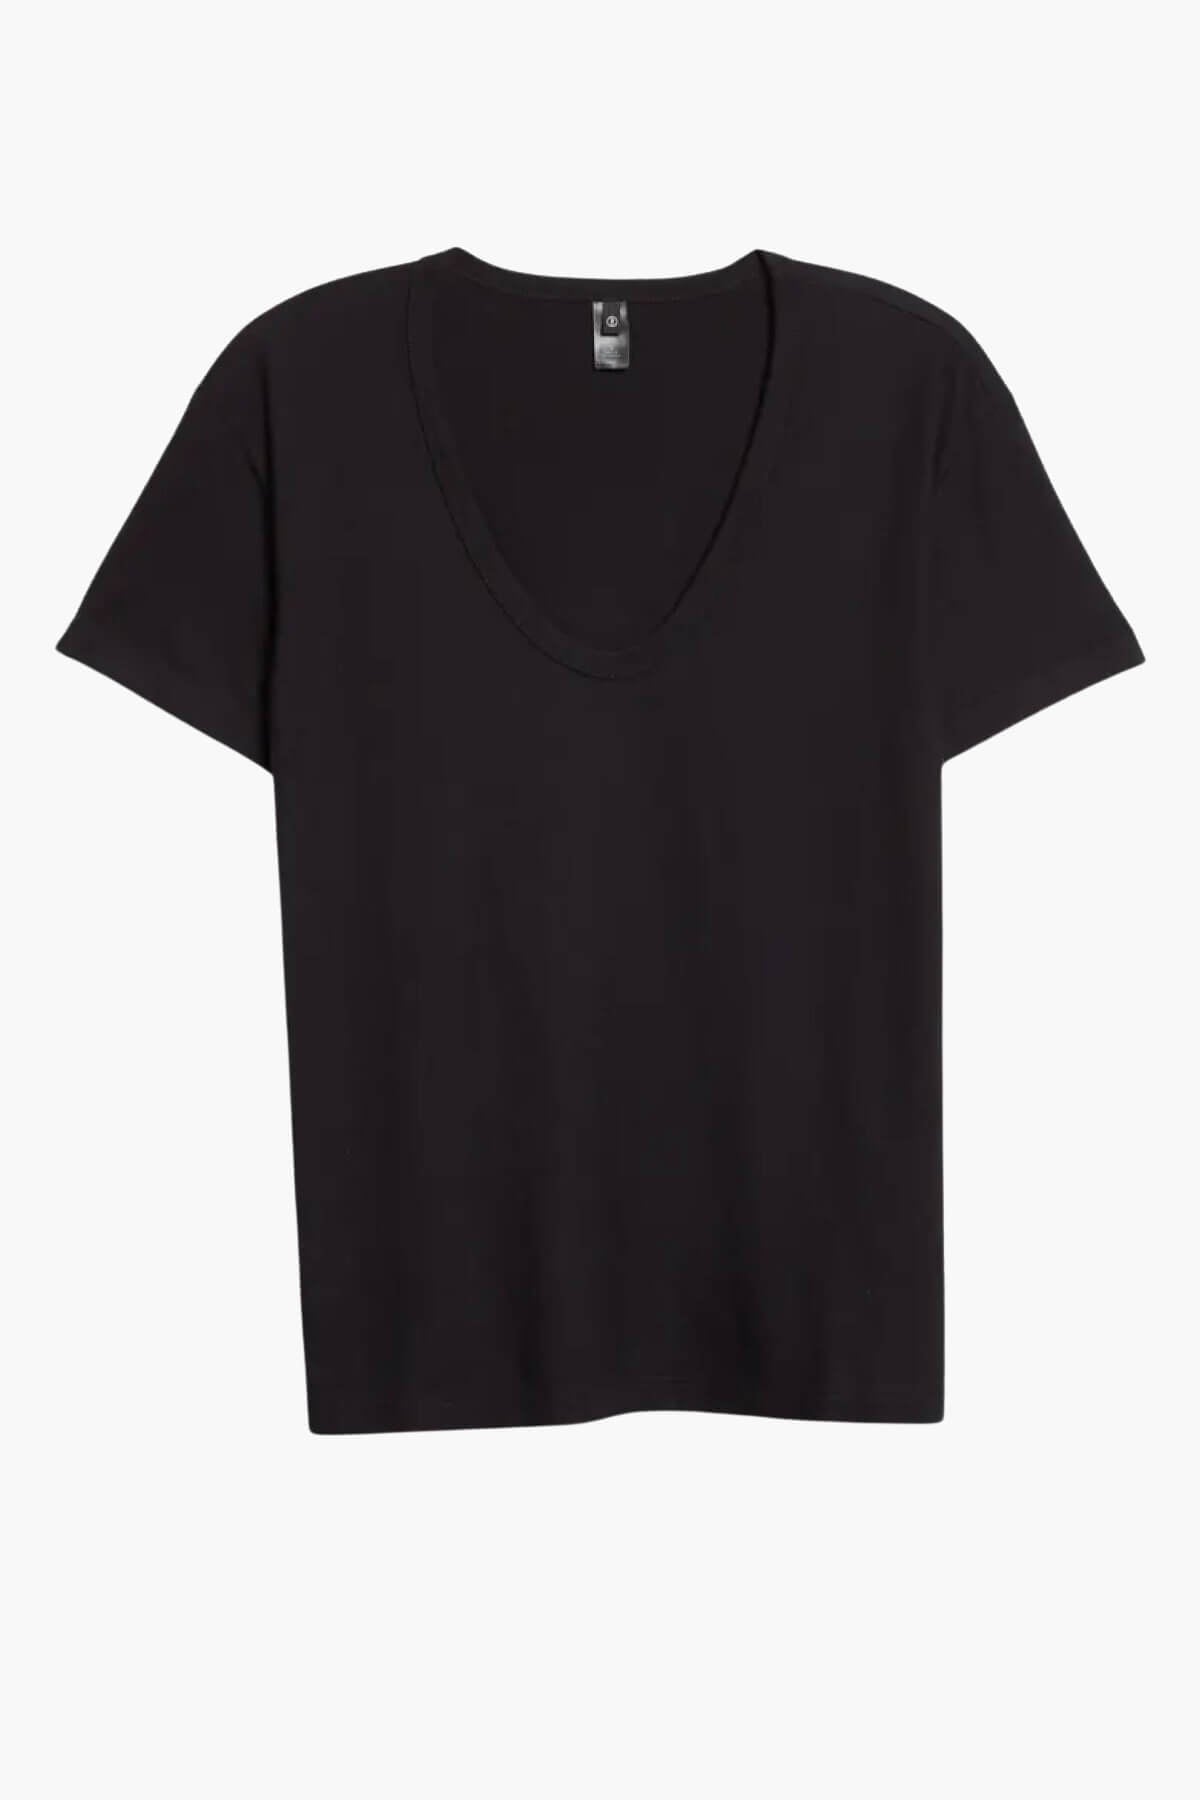 AG Denim Aspen U-Neck T-Shirt - True Black